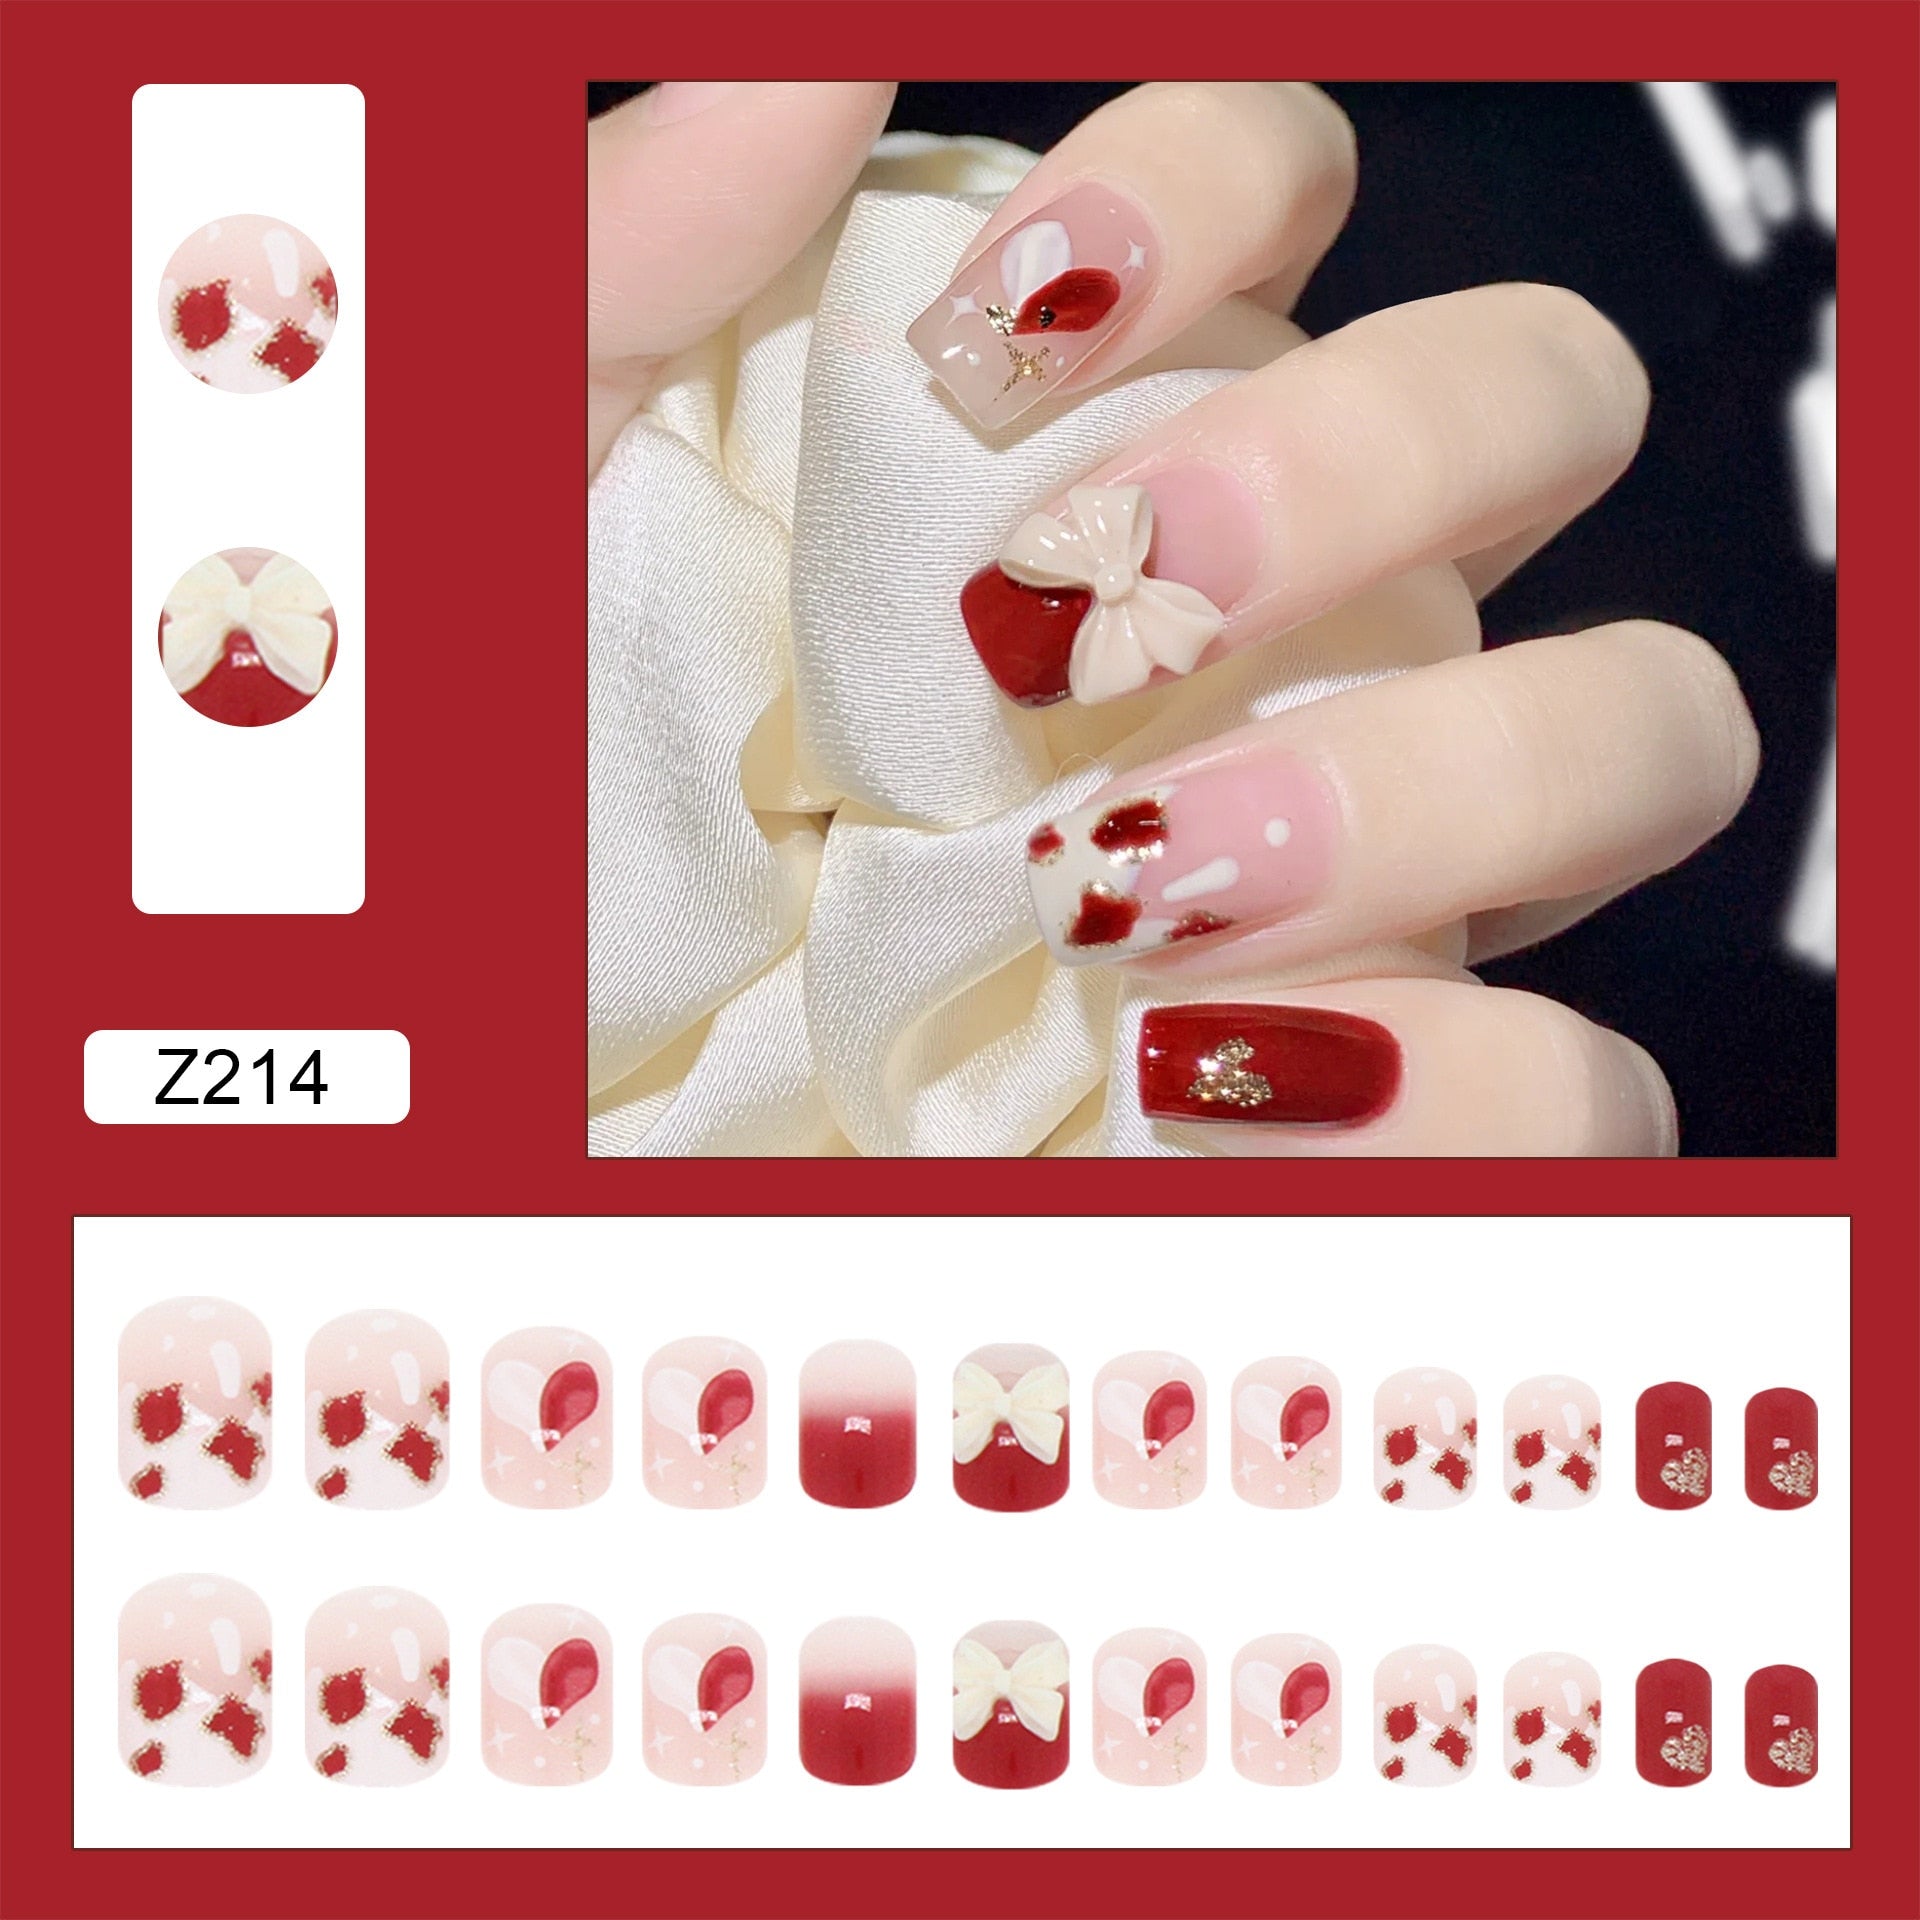 24Pcs/box False Nails with design bling Rhinestones Nail Beauty Press on Fake Nails with glue Full Cover Artificial Nails Tips